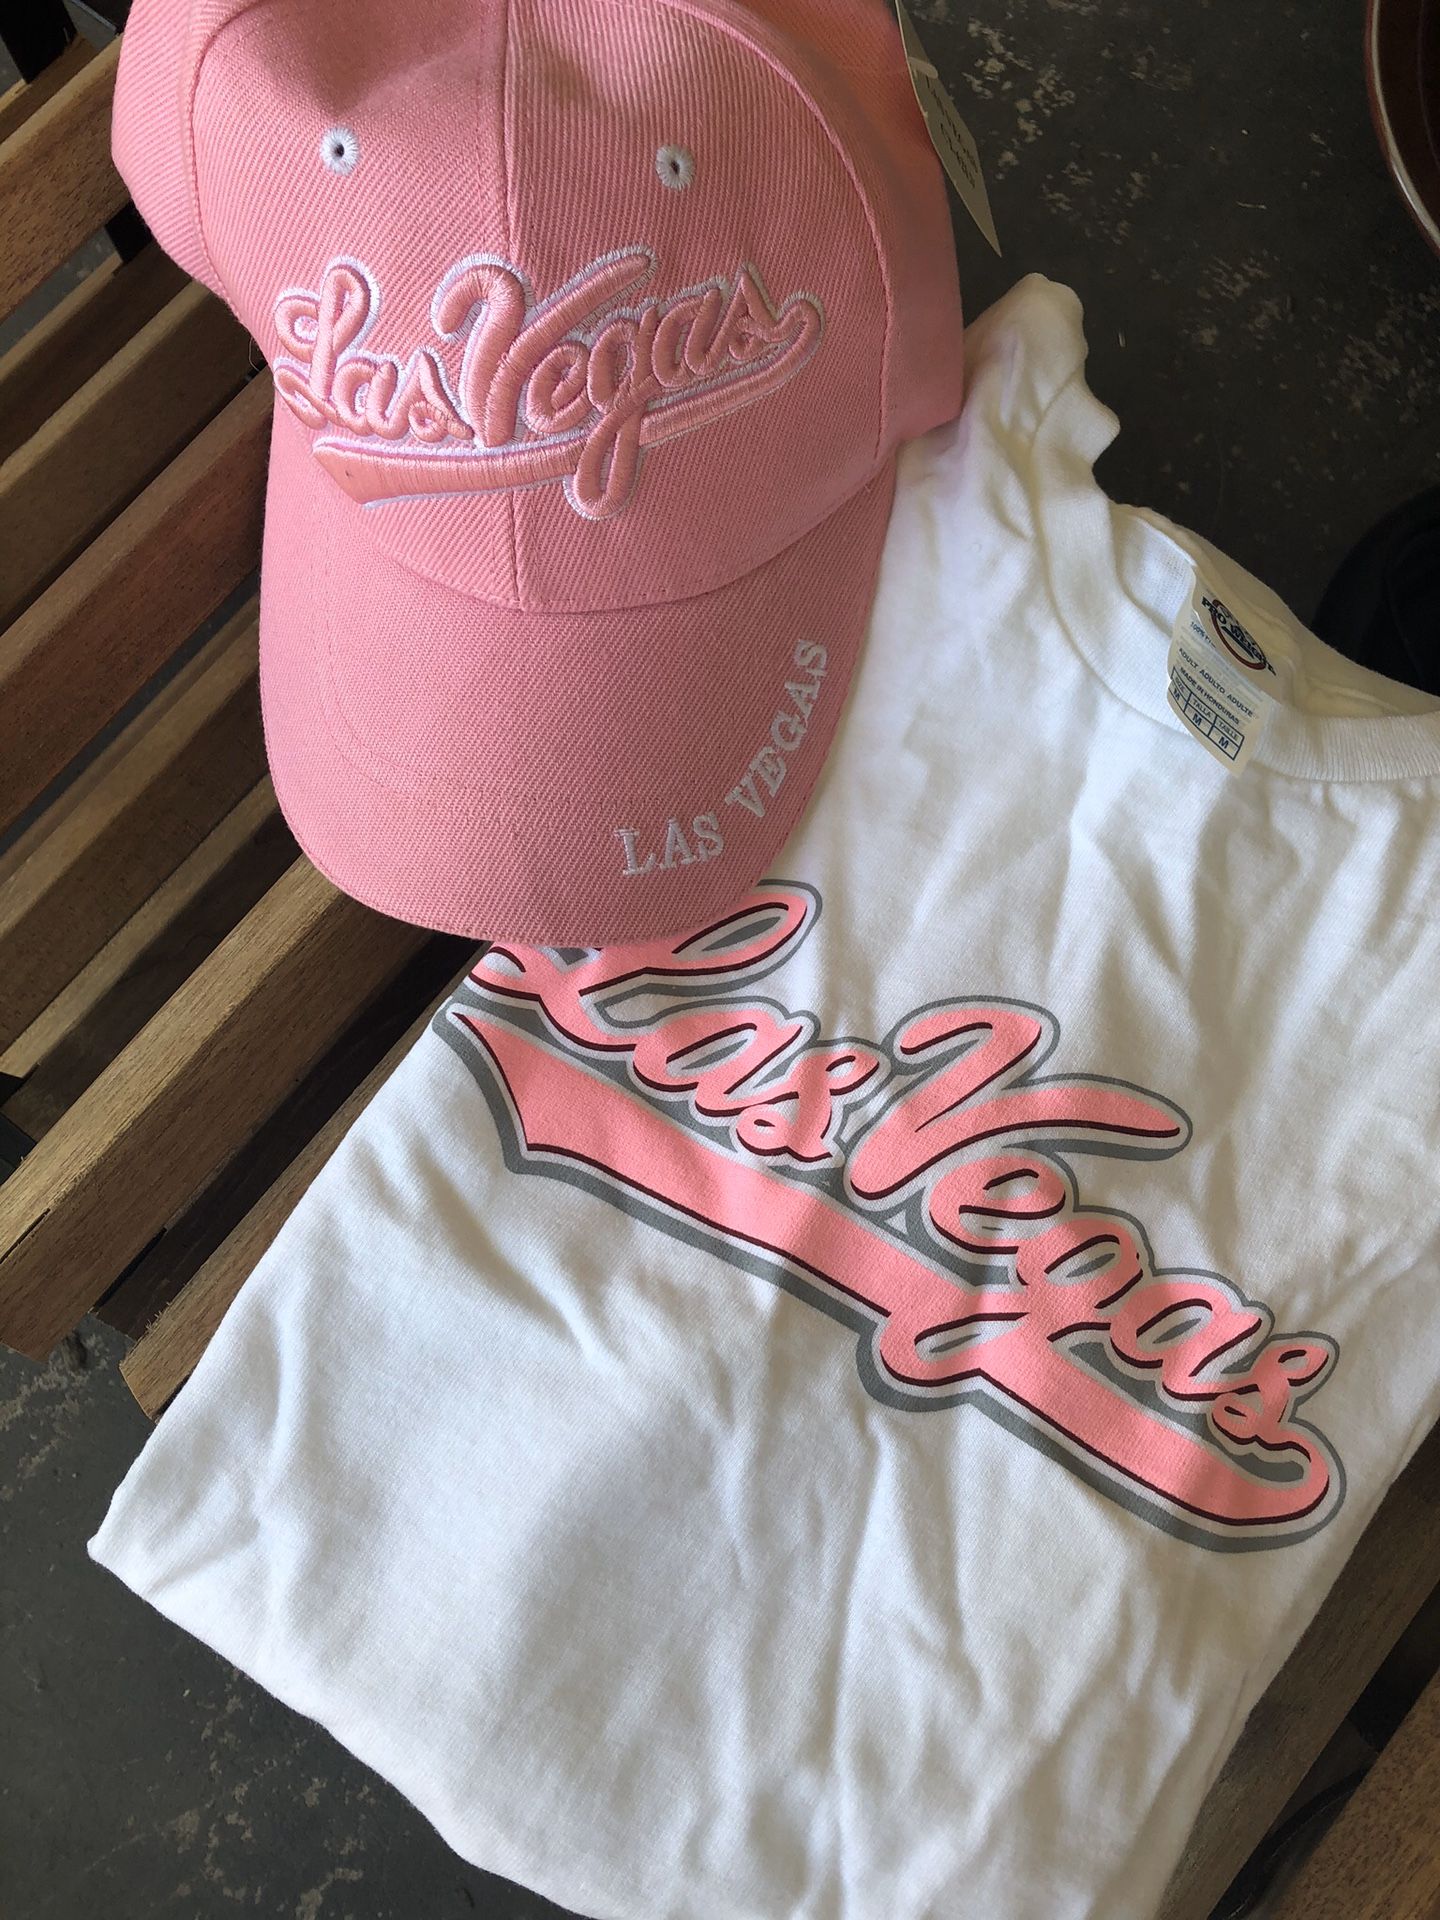 Las Vegas shirt and hat